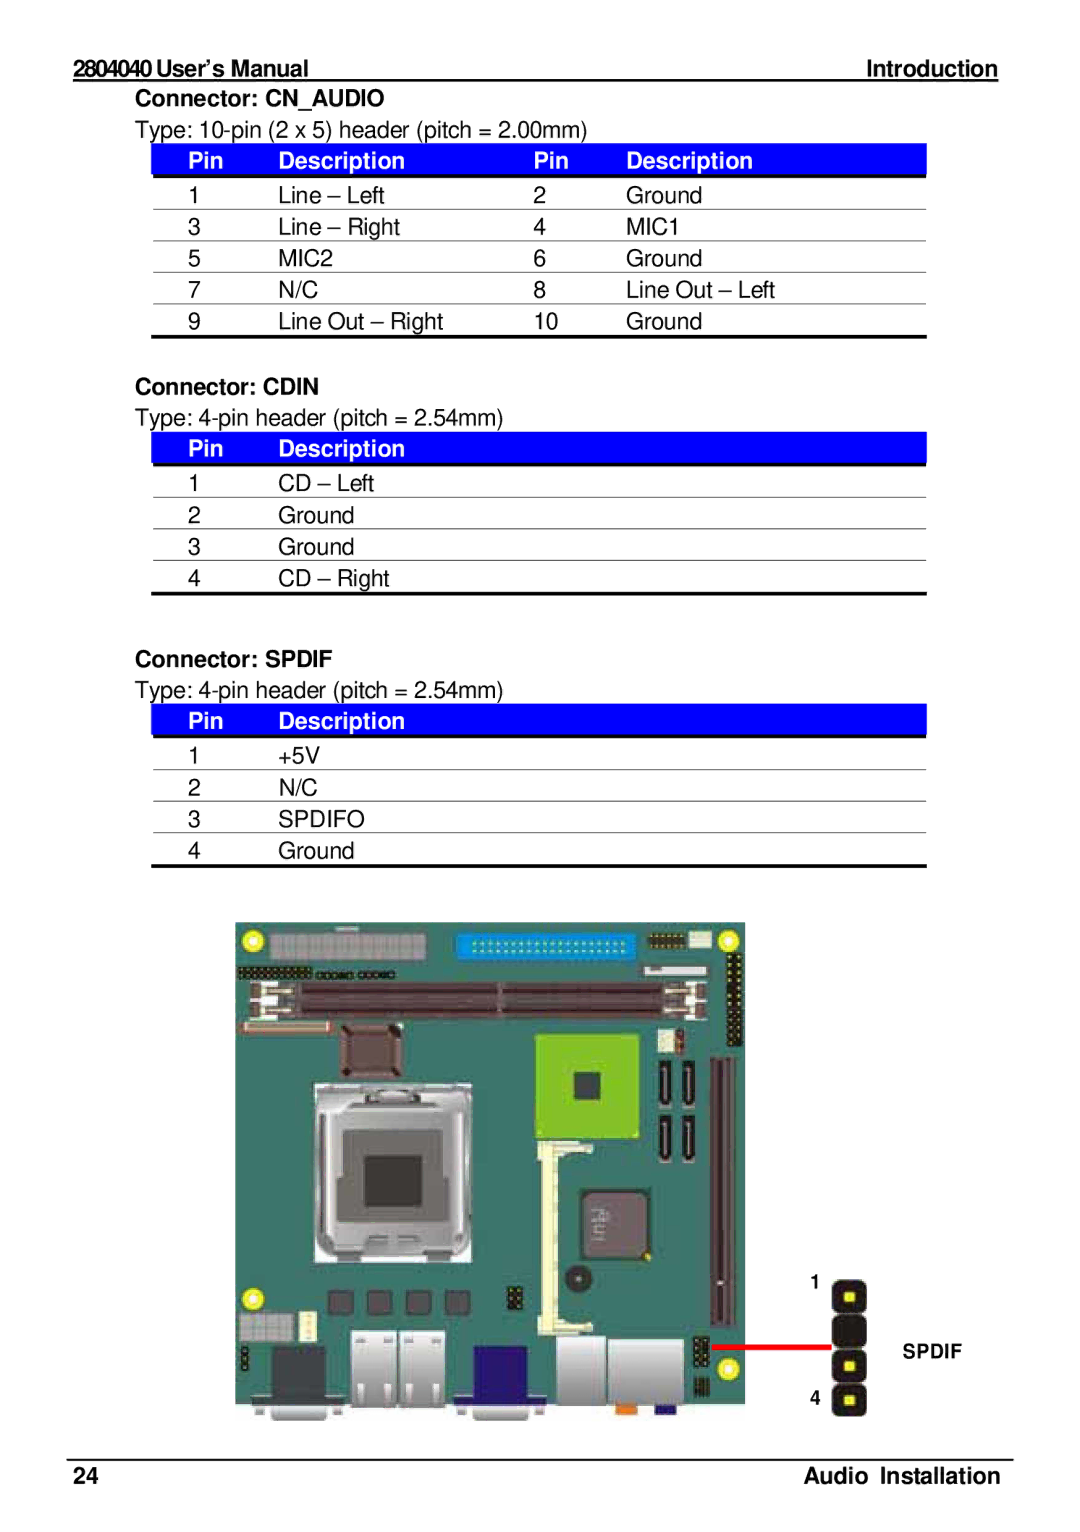 Intel 2804040 user manual User’s Manual Introduction Connector Cnaudio, Pin Description, Connector Cdin, Connector Spdif 